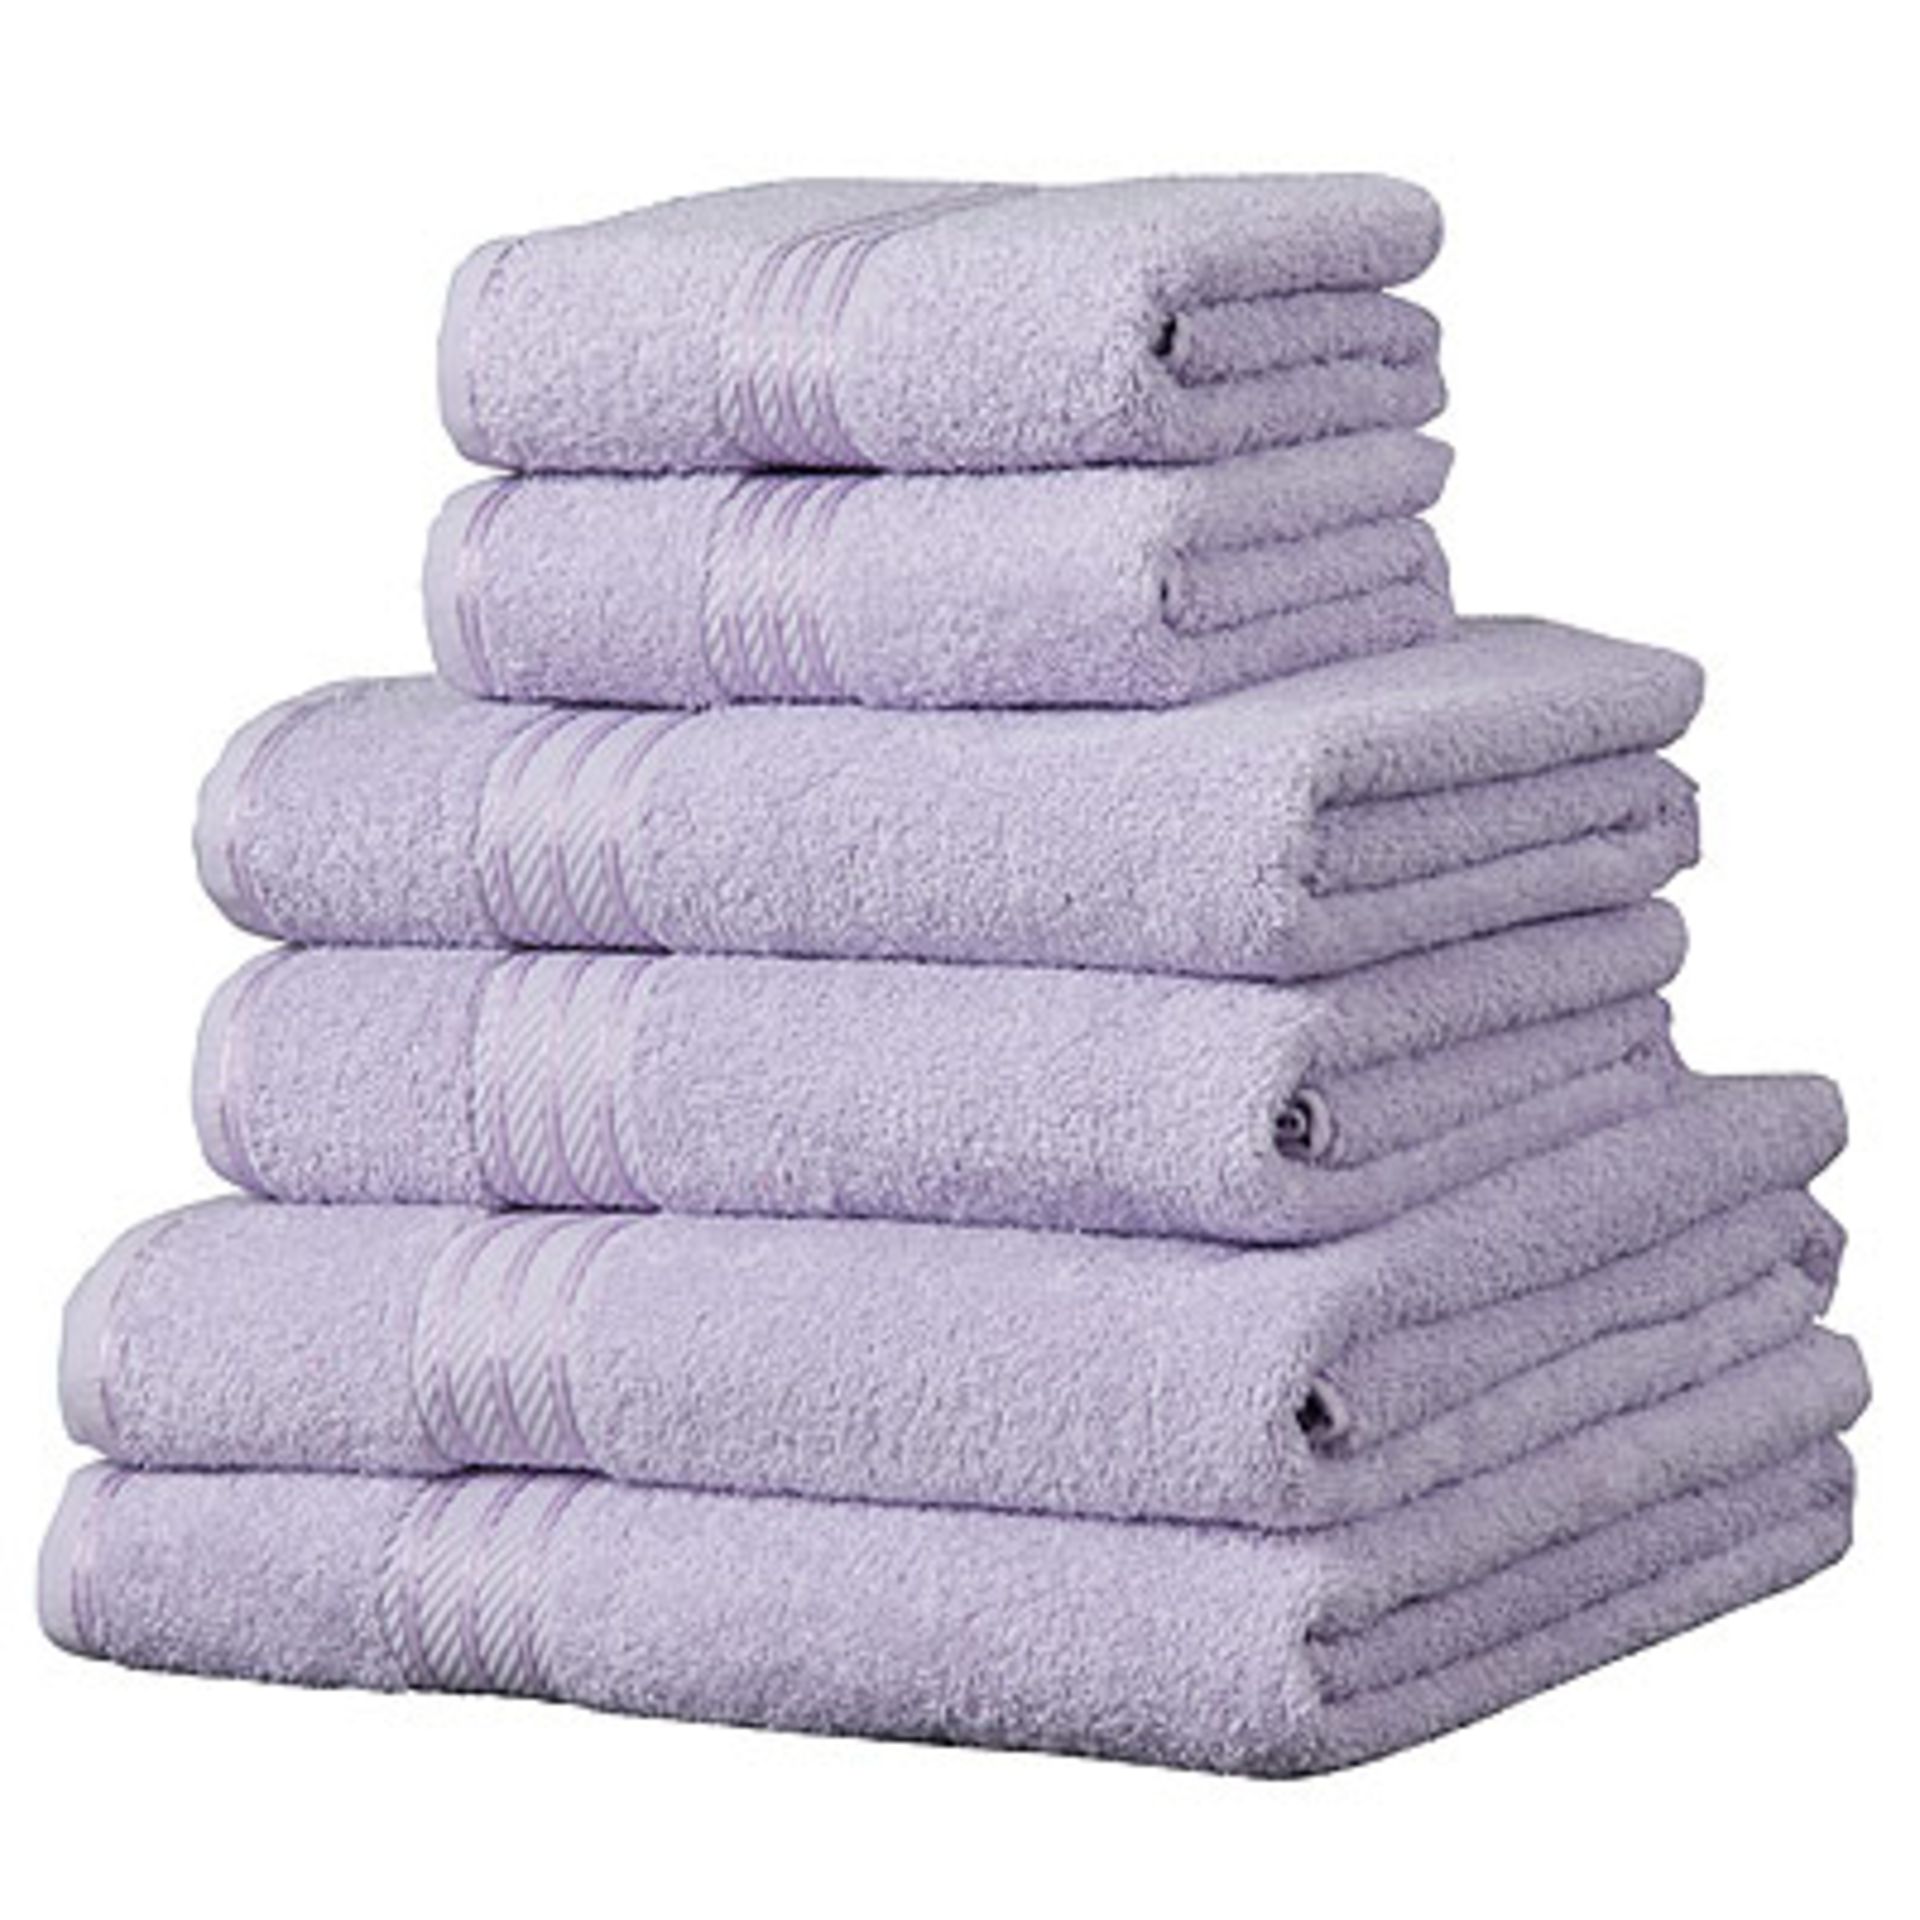 V *TRADE QTY* Brand New Mauve 6 Piece Towel Bale Set With 2 Face Towels - 2 Hand Towels - 1 Bath